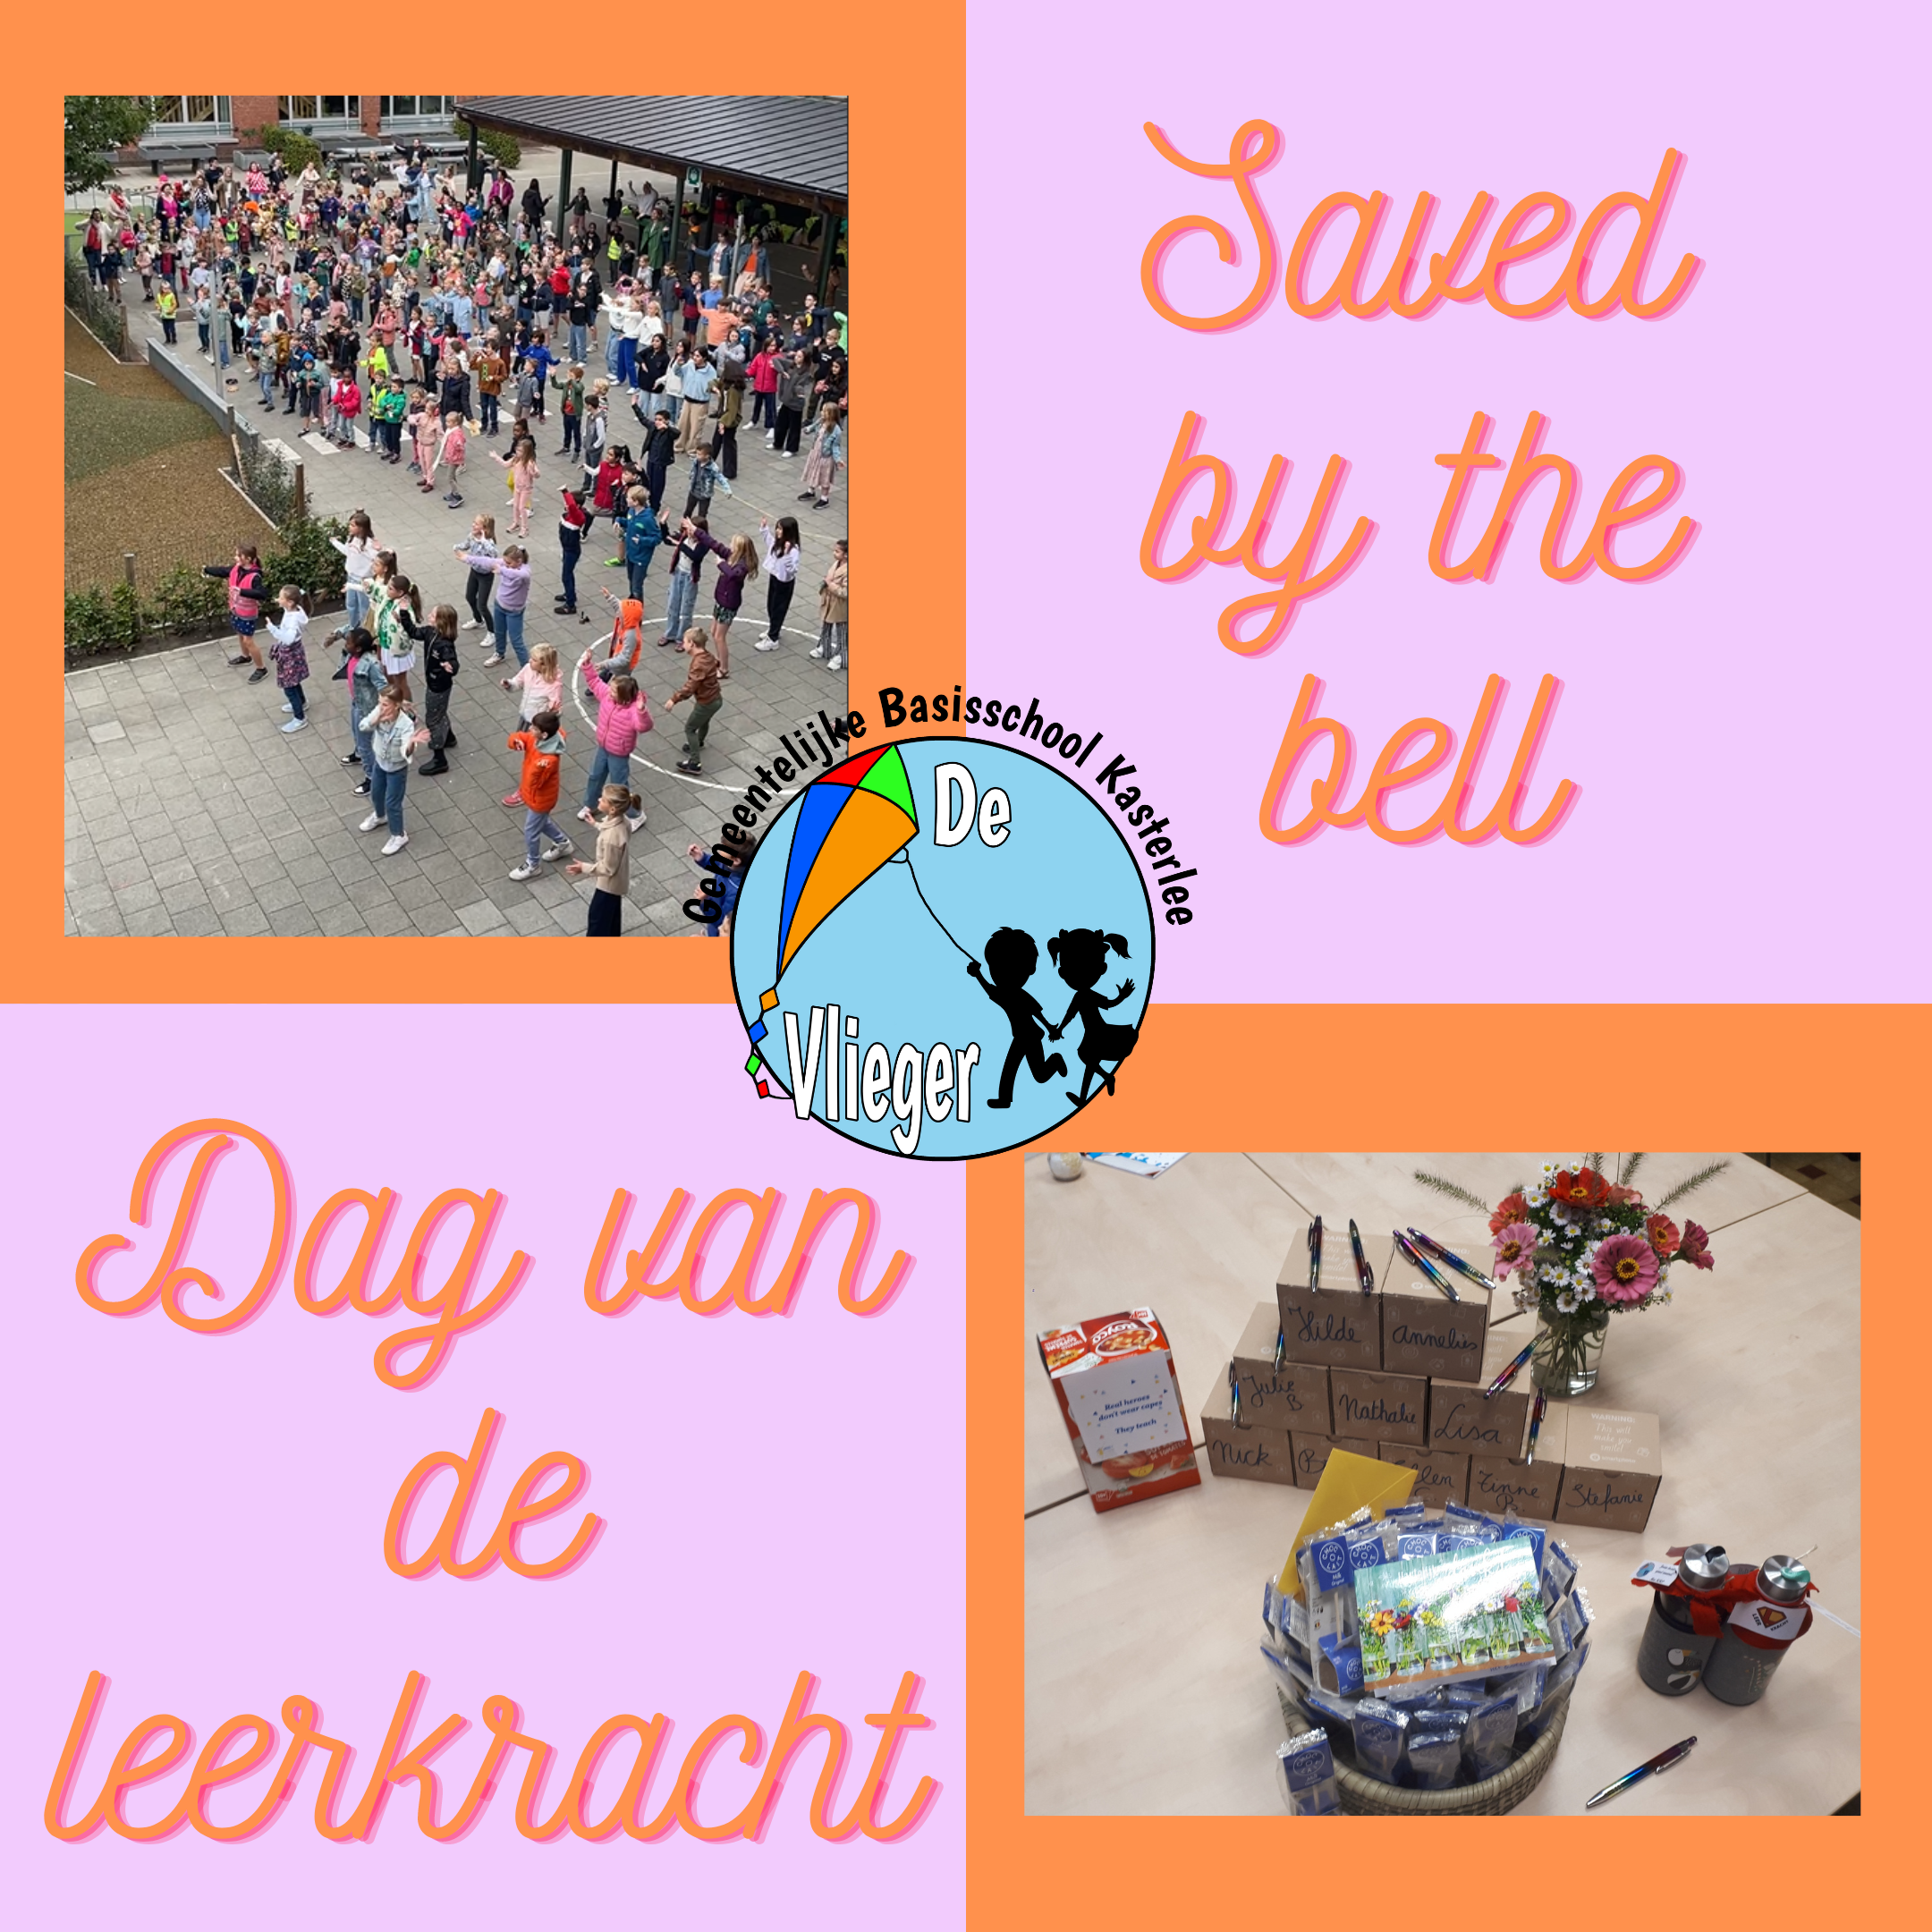 dag vd leerkracht saved by the bell